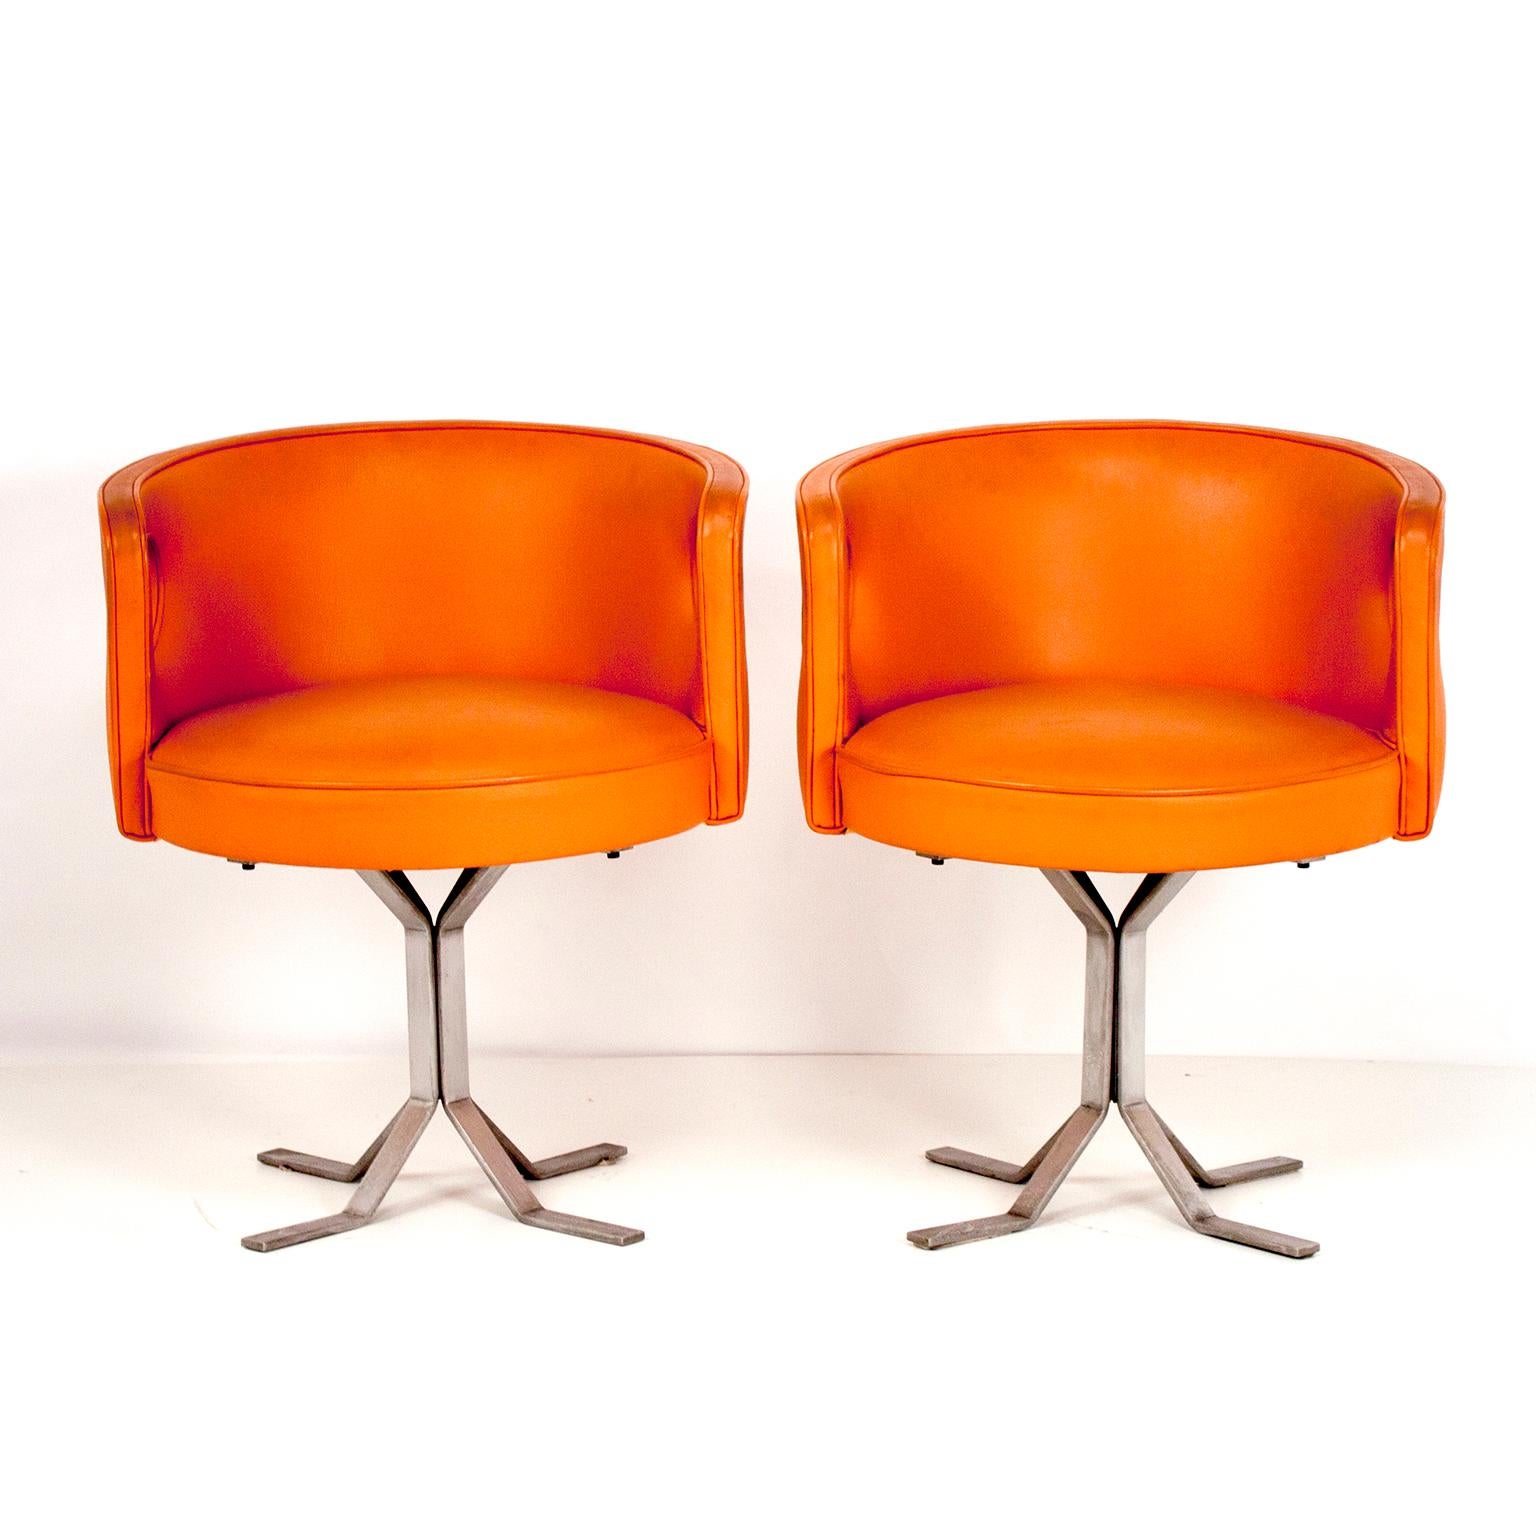 Pair of midcentury orange leather chairs, designed by Jordi Vilanova, 1970s.